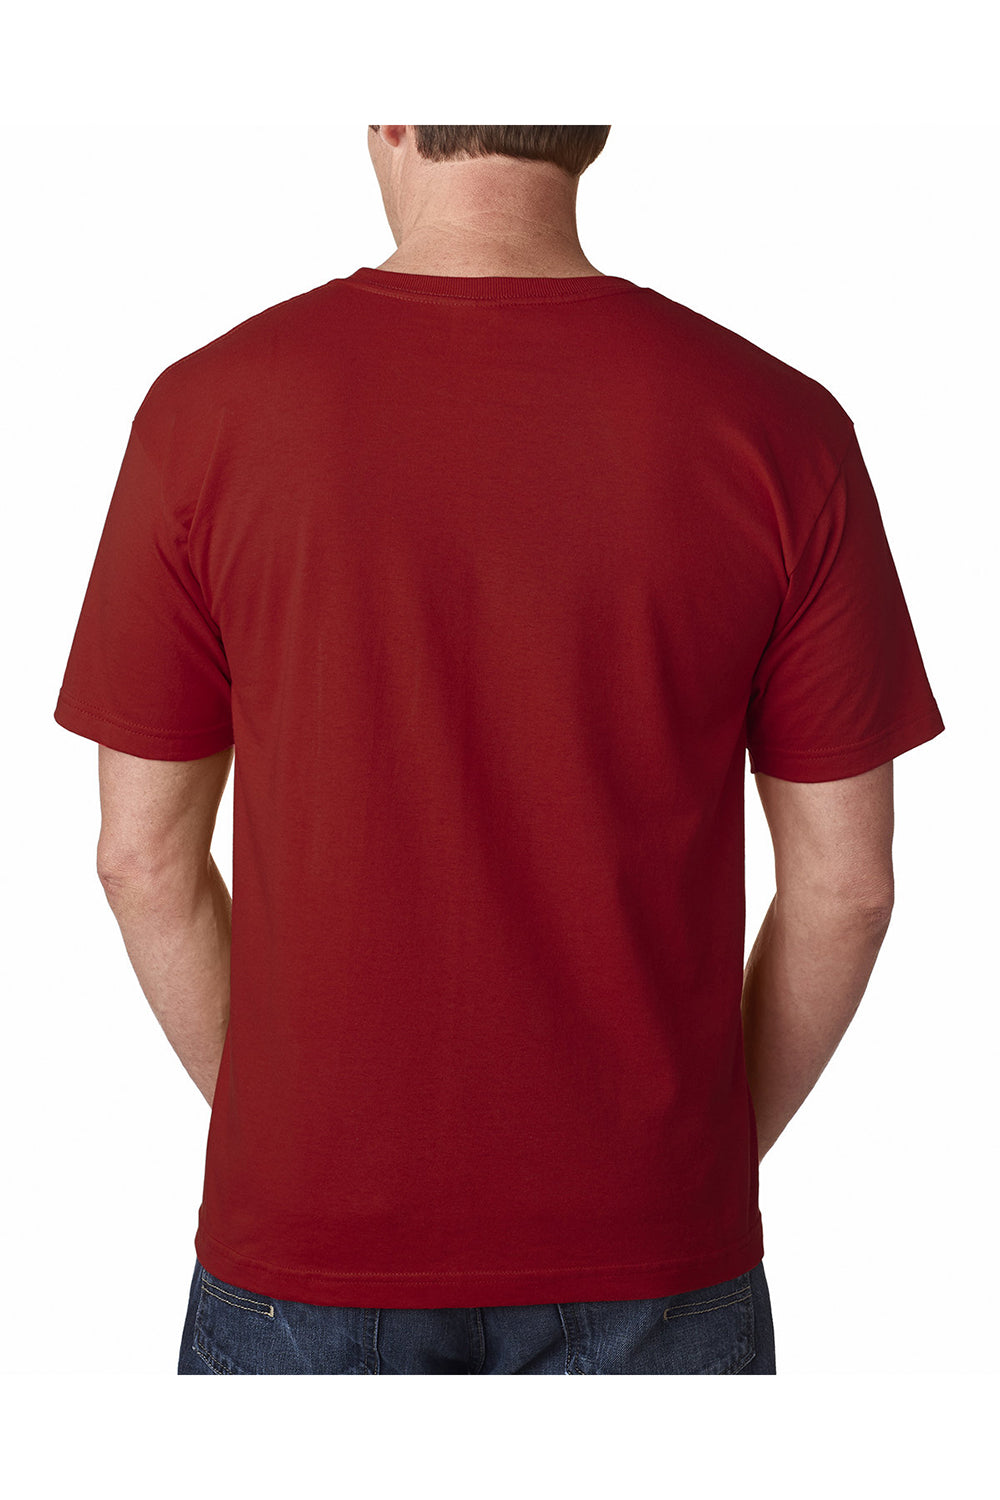 Bayside BA5040 Mens USA Made Short Sleeve Crewneck T-Shirt Cardinal Red Model Back